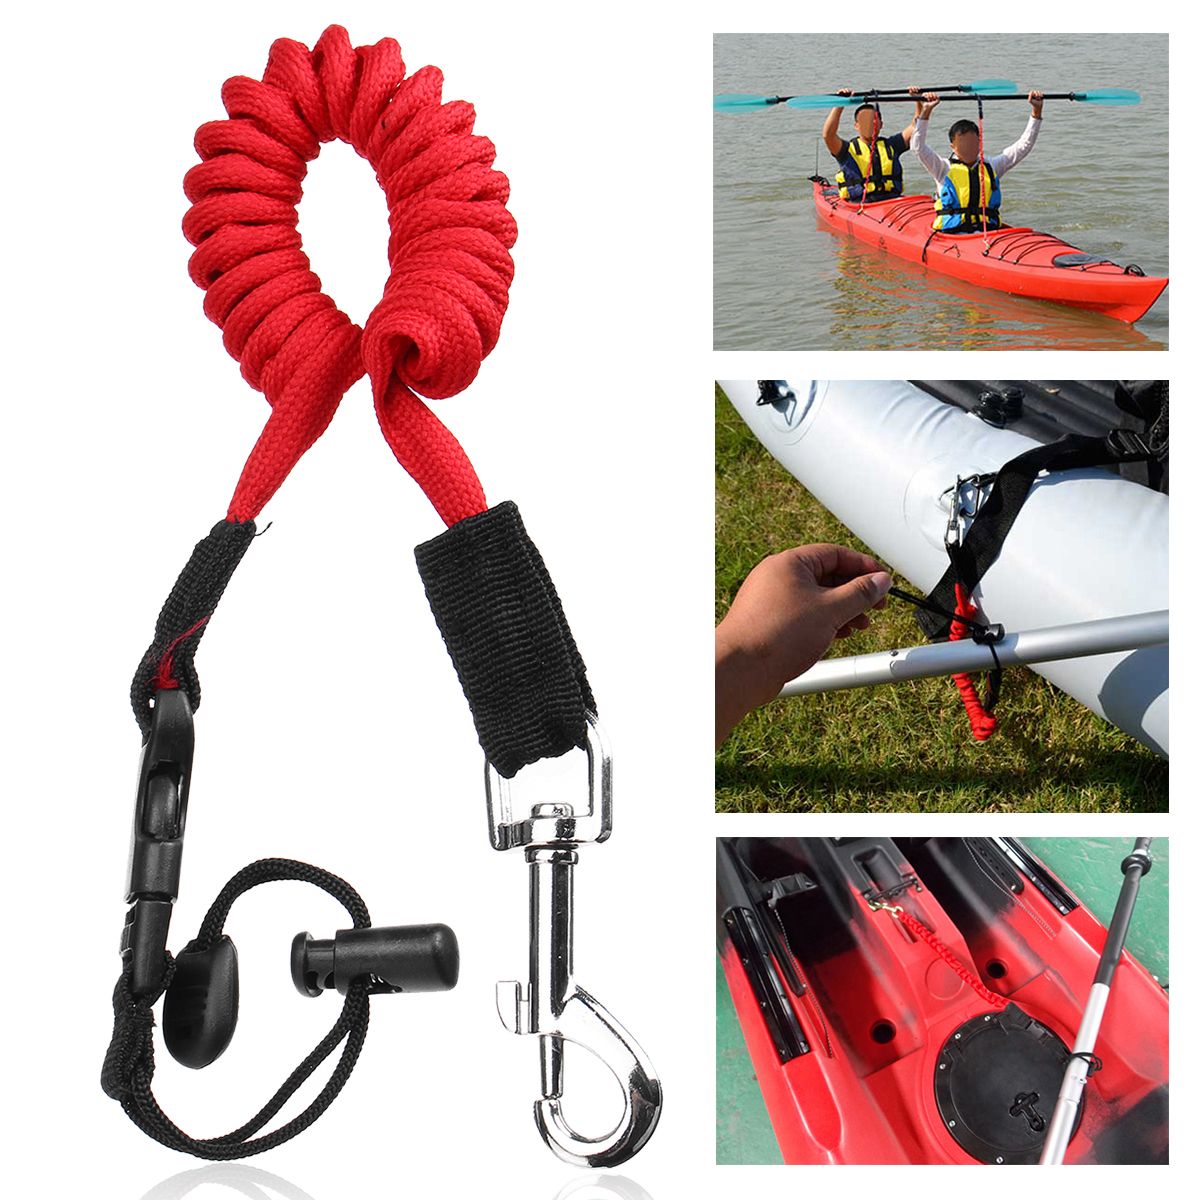 Portable-Safety-Kayak-Canoe-Boat-Paddle-Leash-Elastic-Fishing-Rod-Coiled-Lanyard-Tie-Rope-1547253